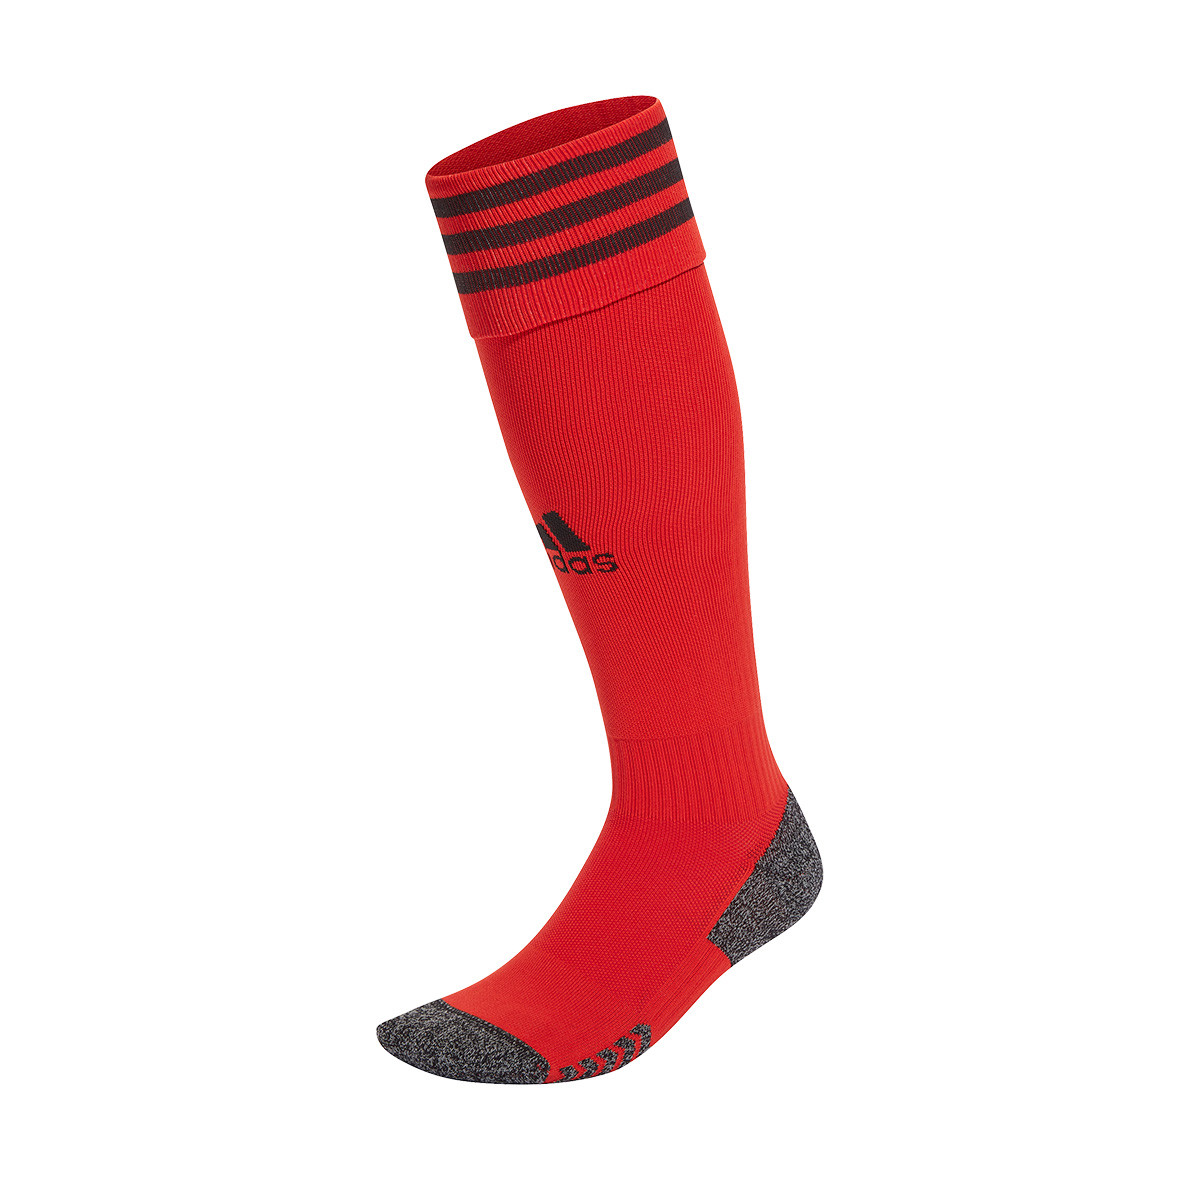 Mens Black with Red adidas adisock Football Socks